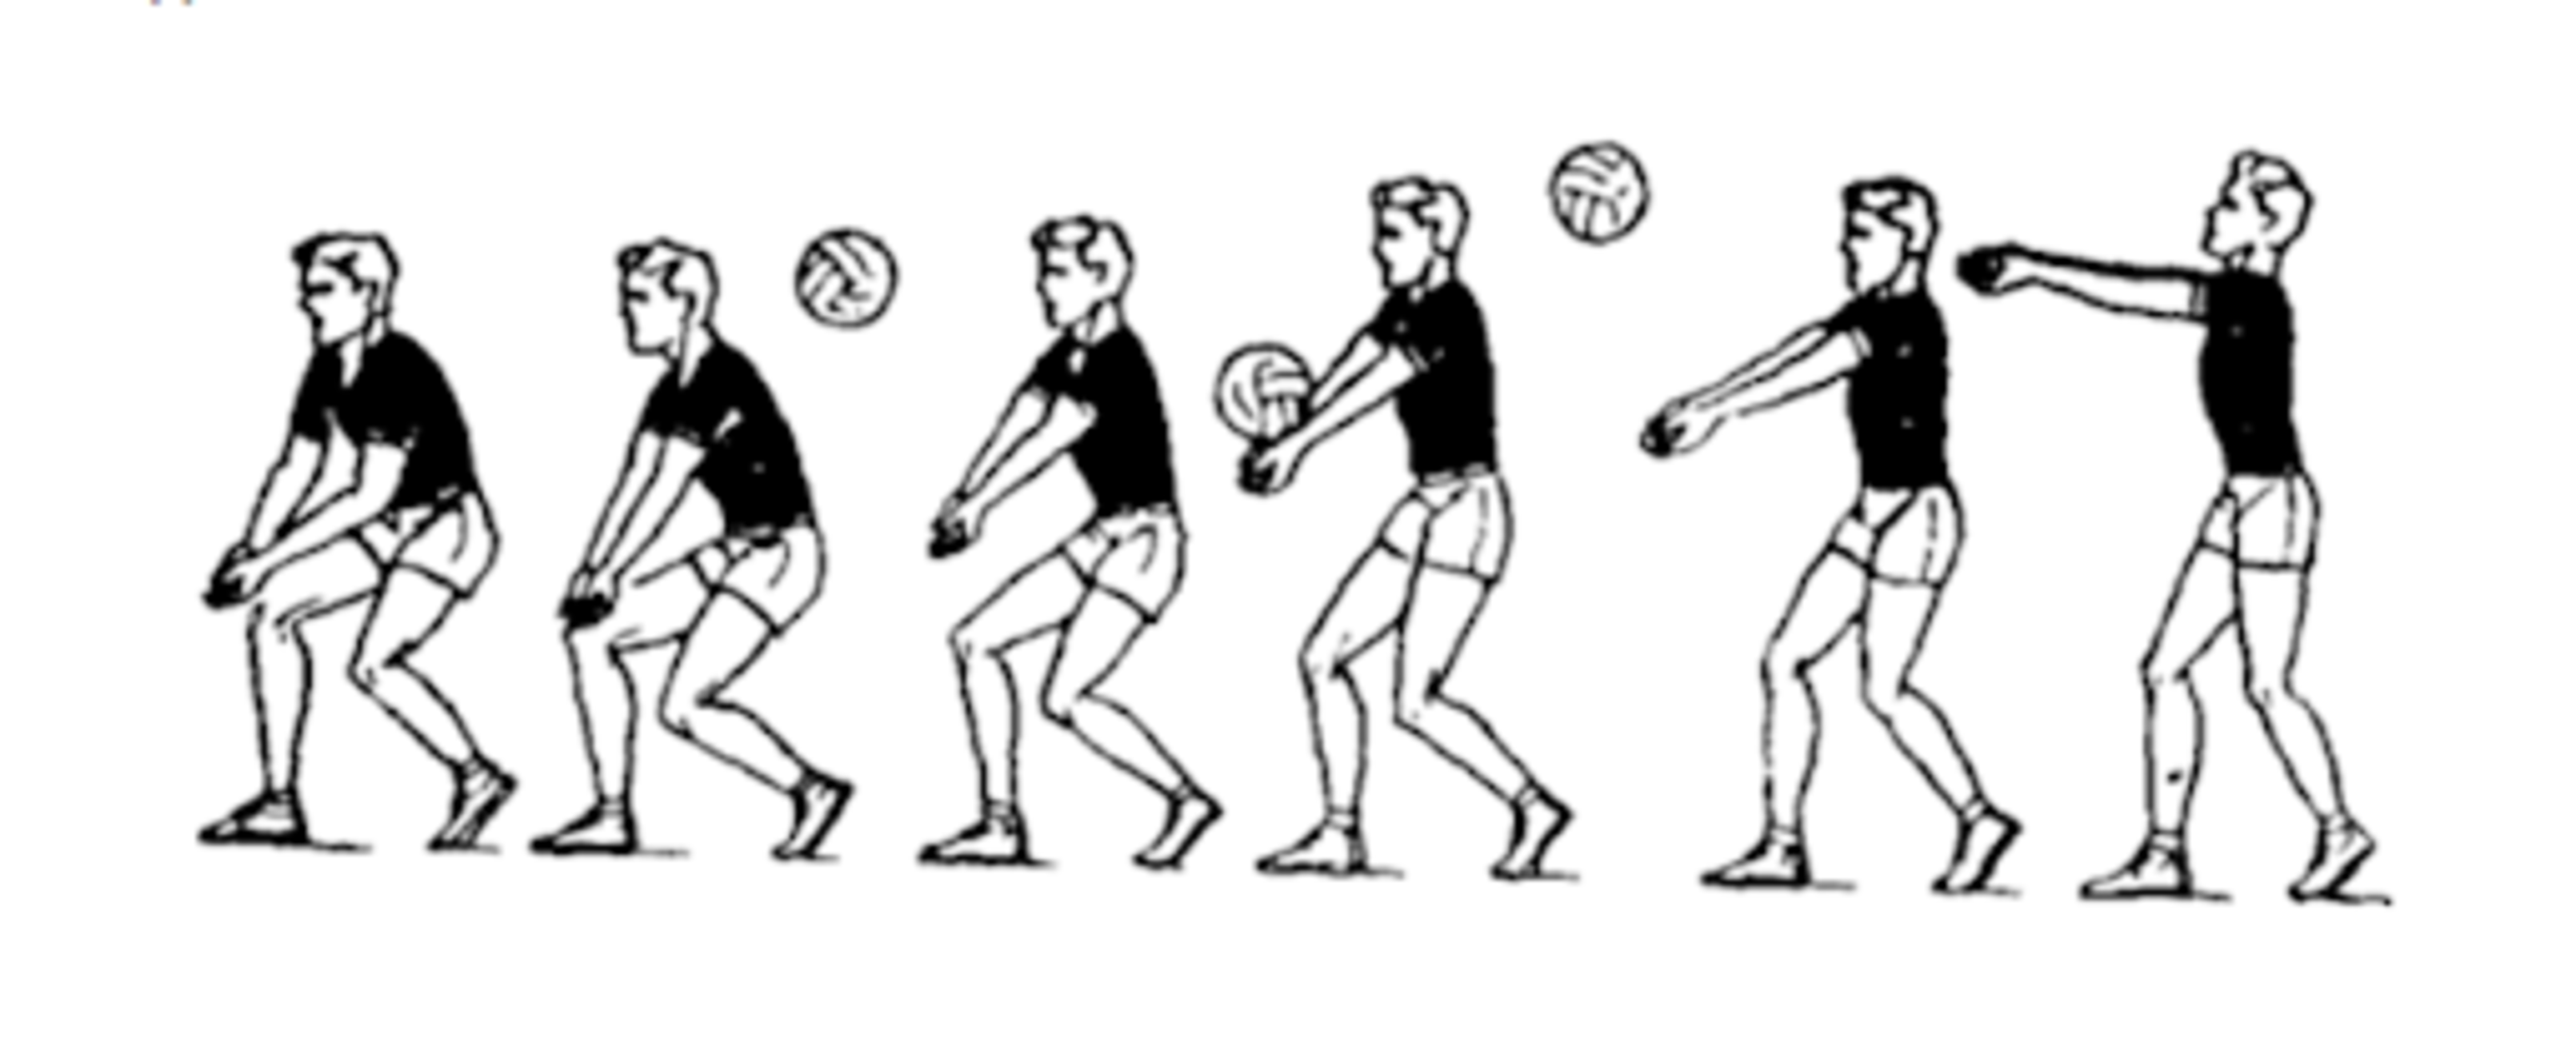 Прием передачи снизу волейбол. Техника передачи мяча двумя руками снизу в волейболе. Техника приема и передачи мяча снизу двумя руками в волейболе. Приём мяча снизу 2 руками в волейболе. Техника приема мяча снизу двумя руками.